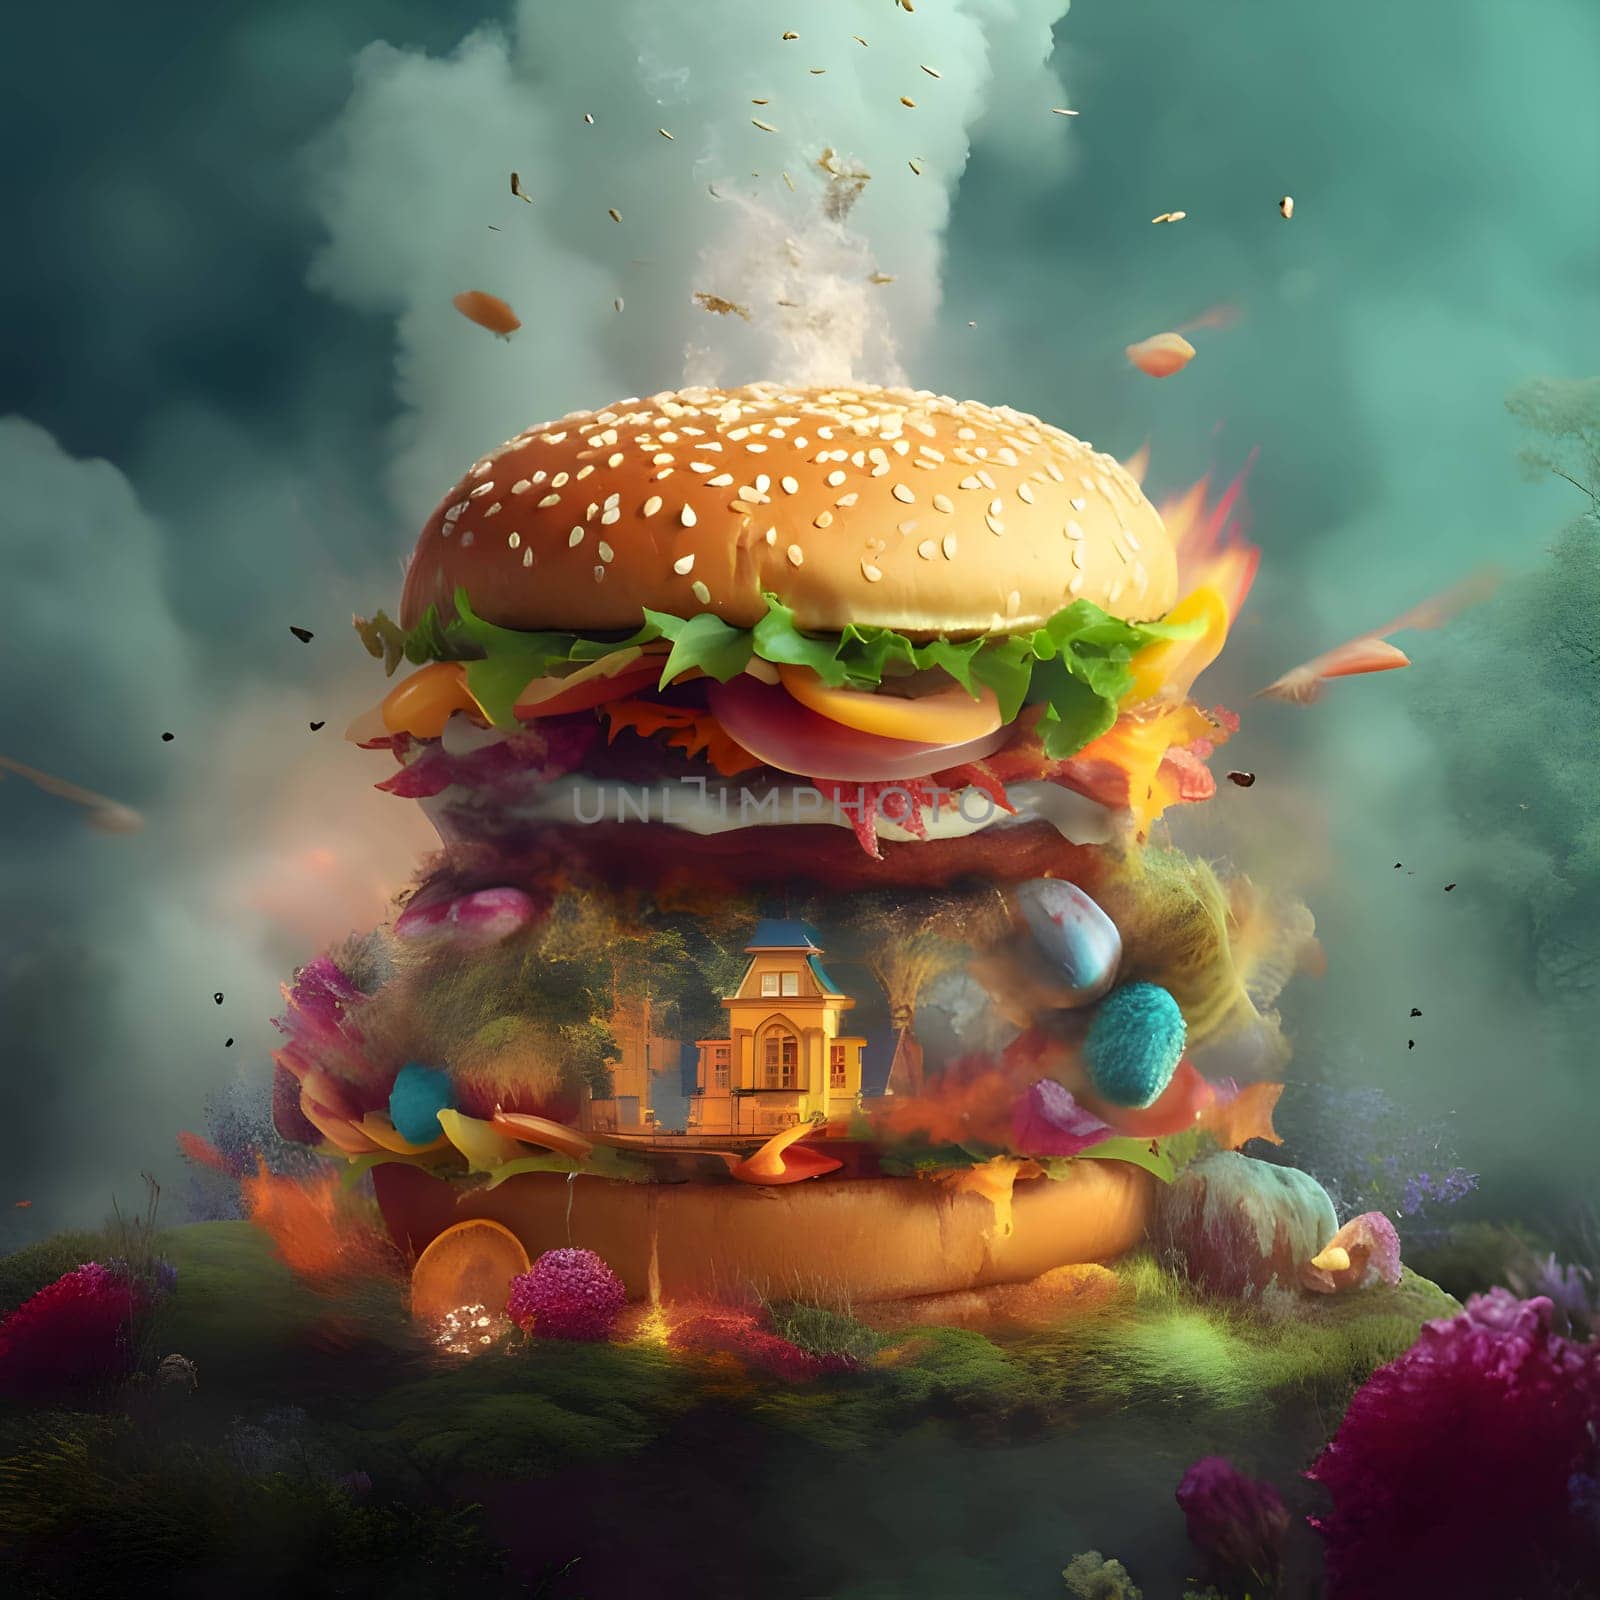 Abstract illustration - hamburger nature arrangement by ThemesS